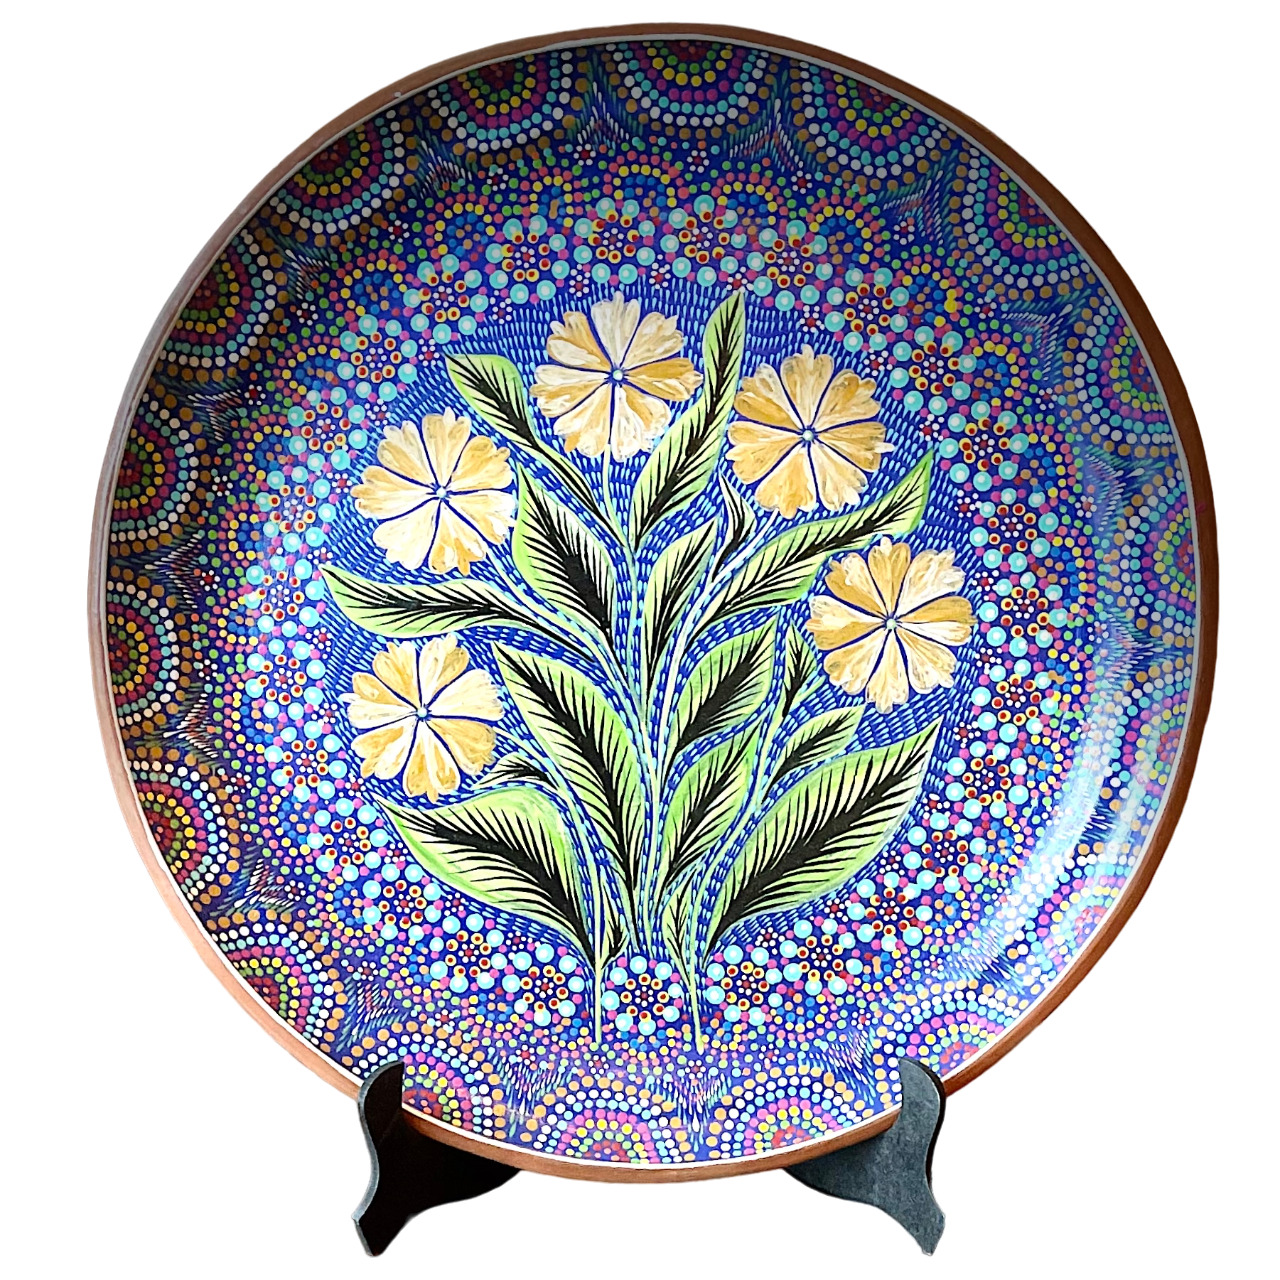 Decorative Plate - Flowers - Blue 42CMS / 16.5 INCHES - Handmade 100% Unique